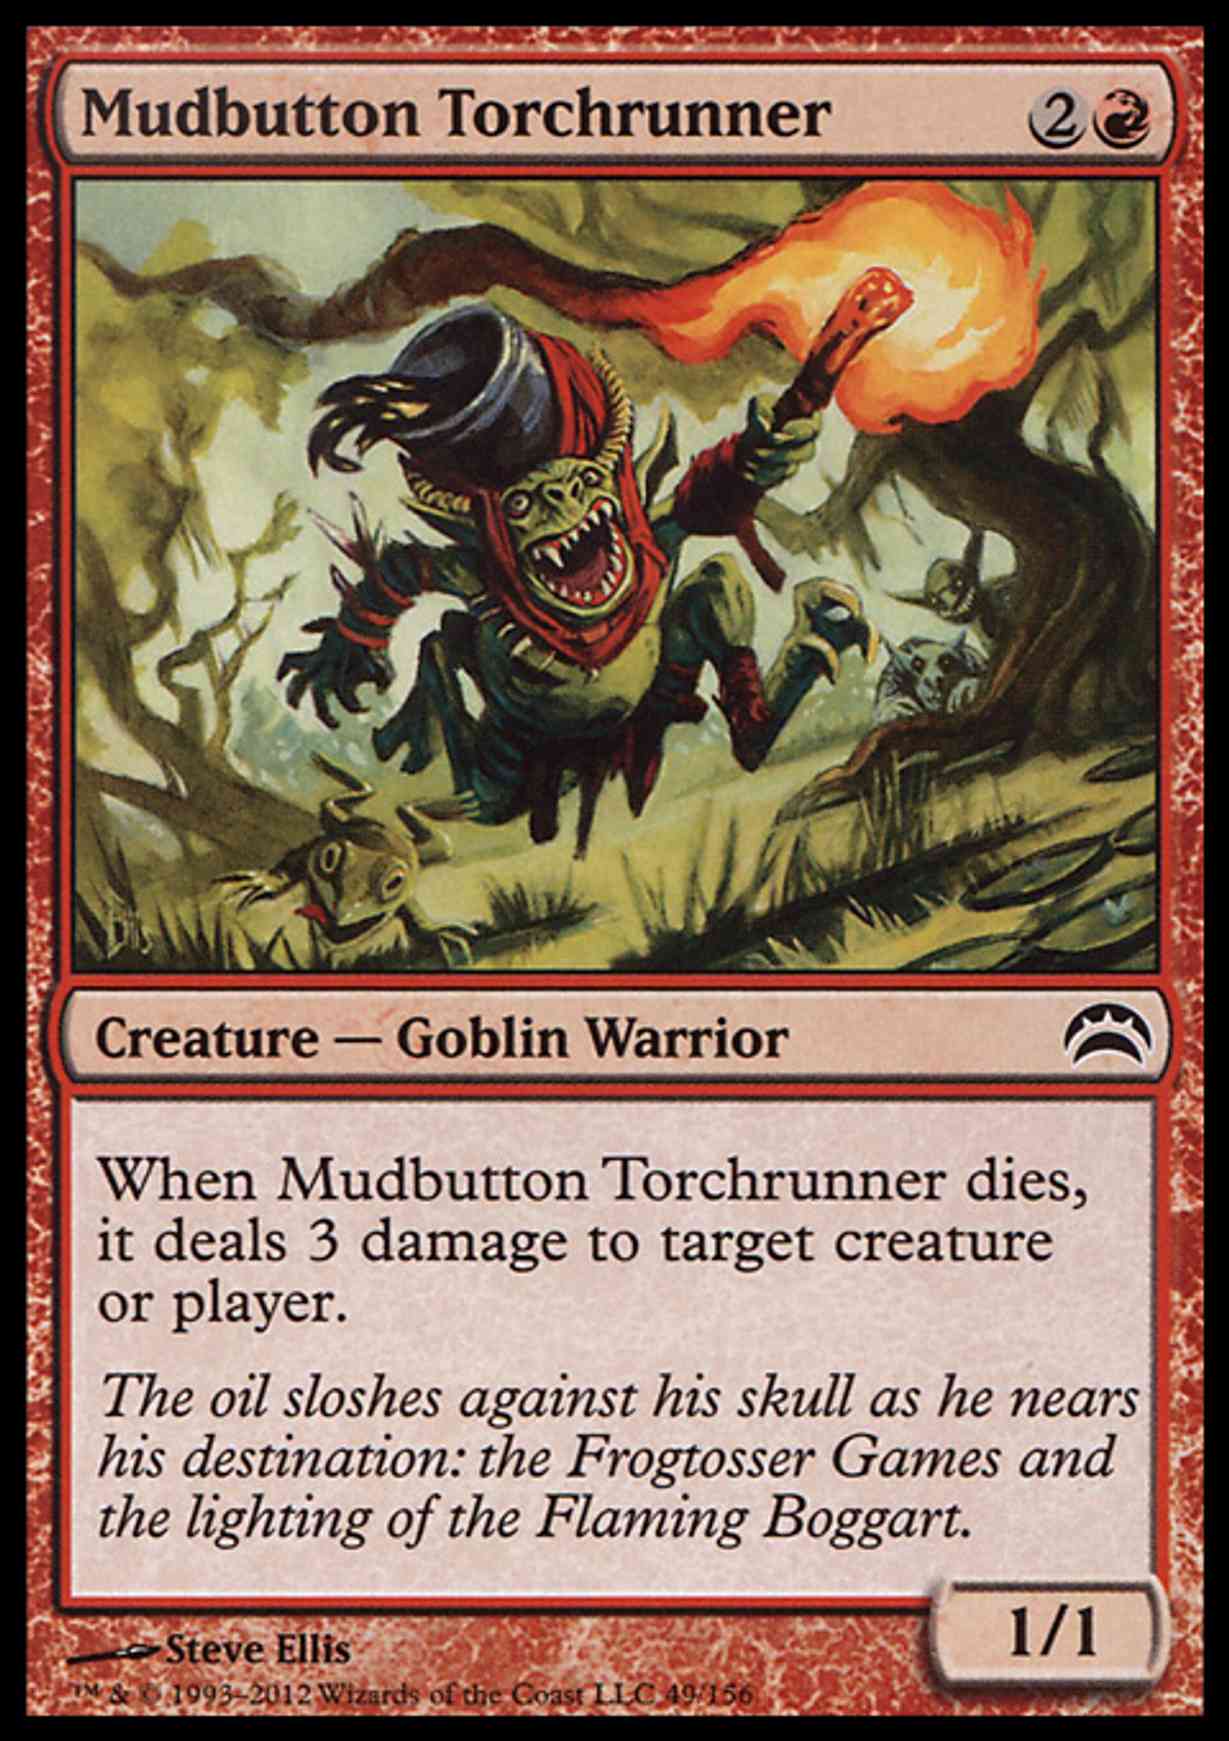 Mudbutton Torchrunner magic card front